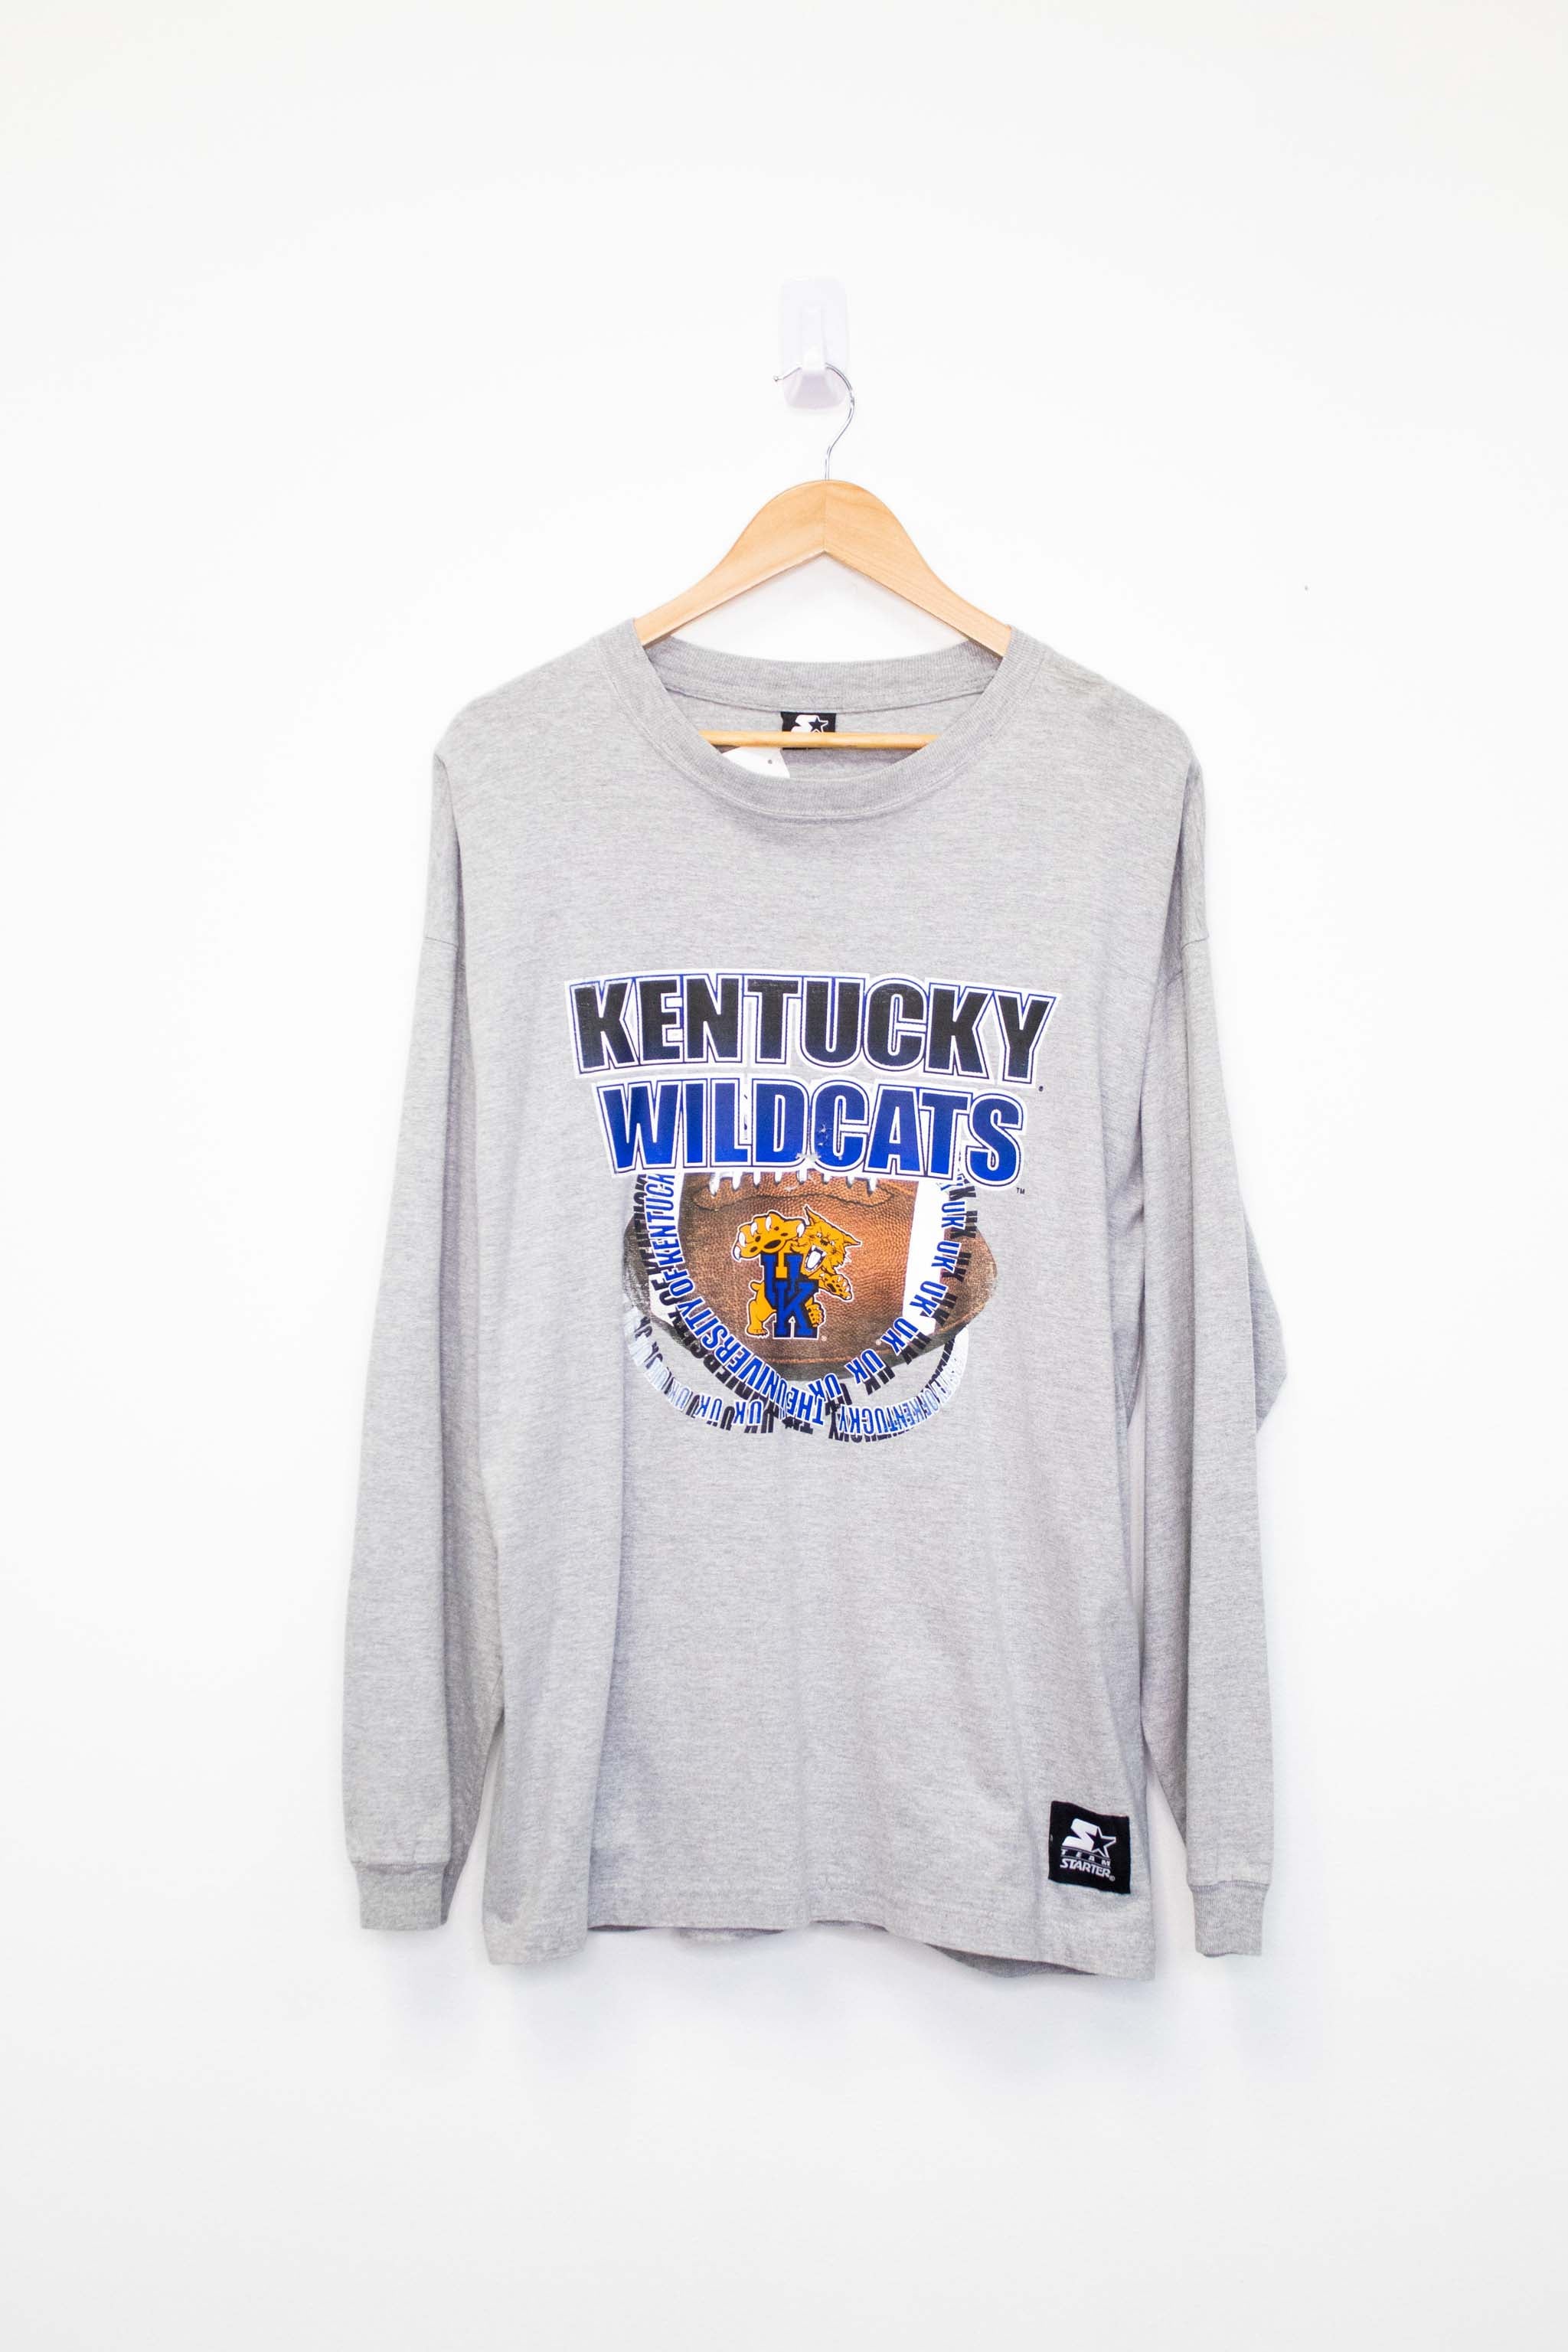 Vintage Kentucky Wildcats Longsleeve